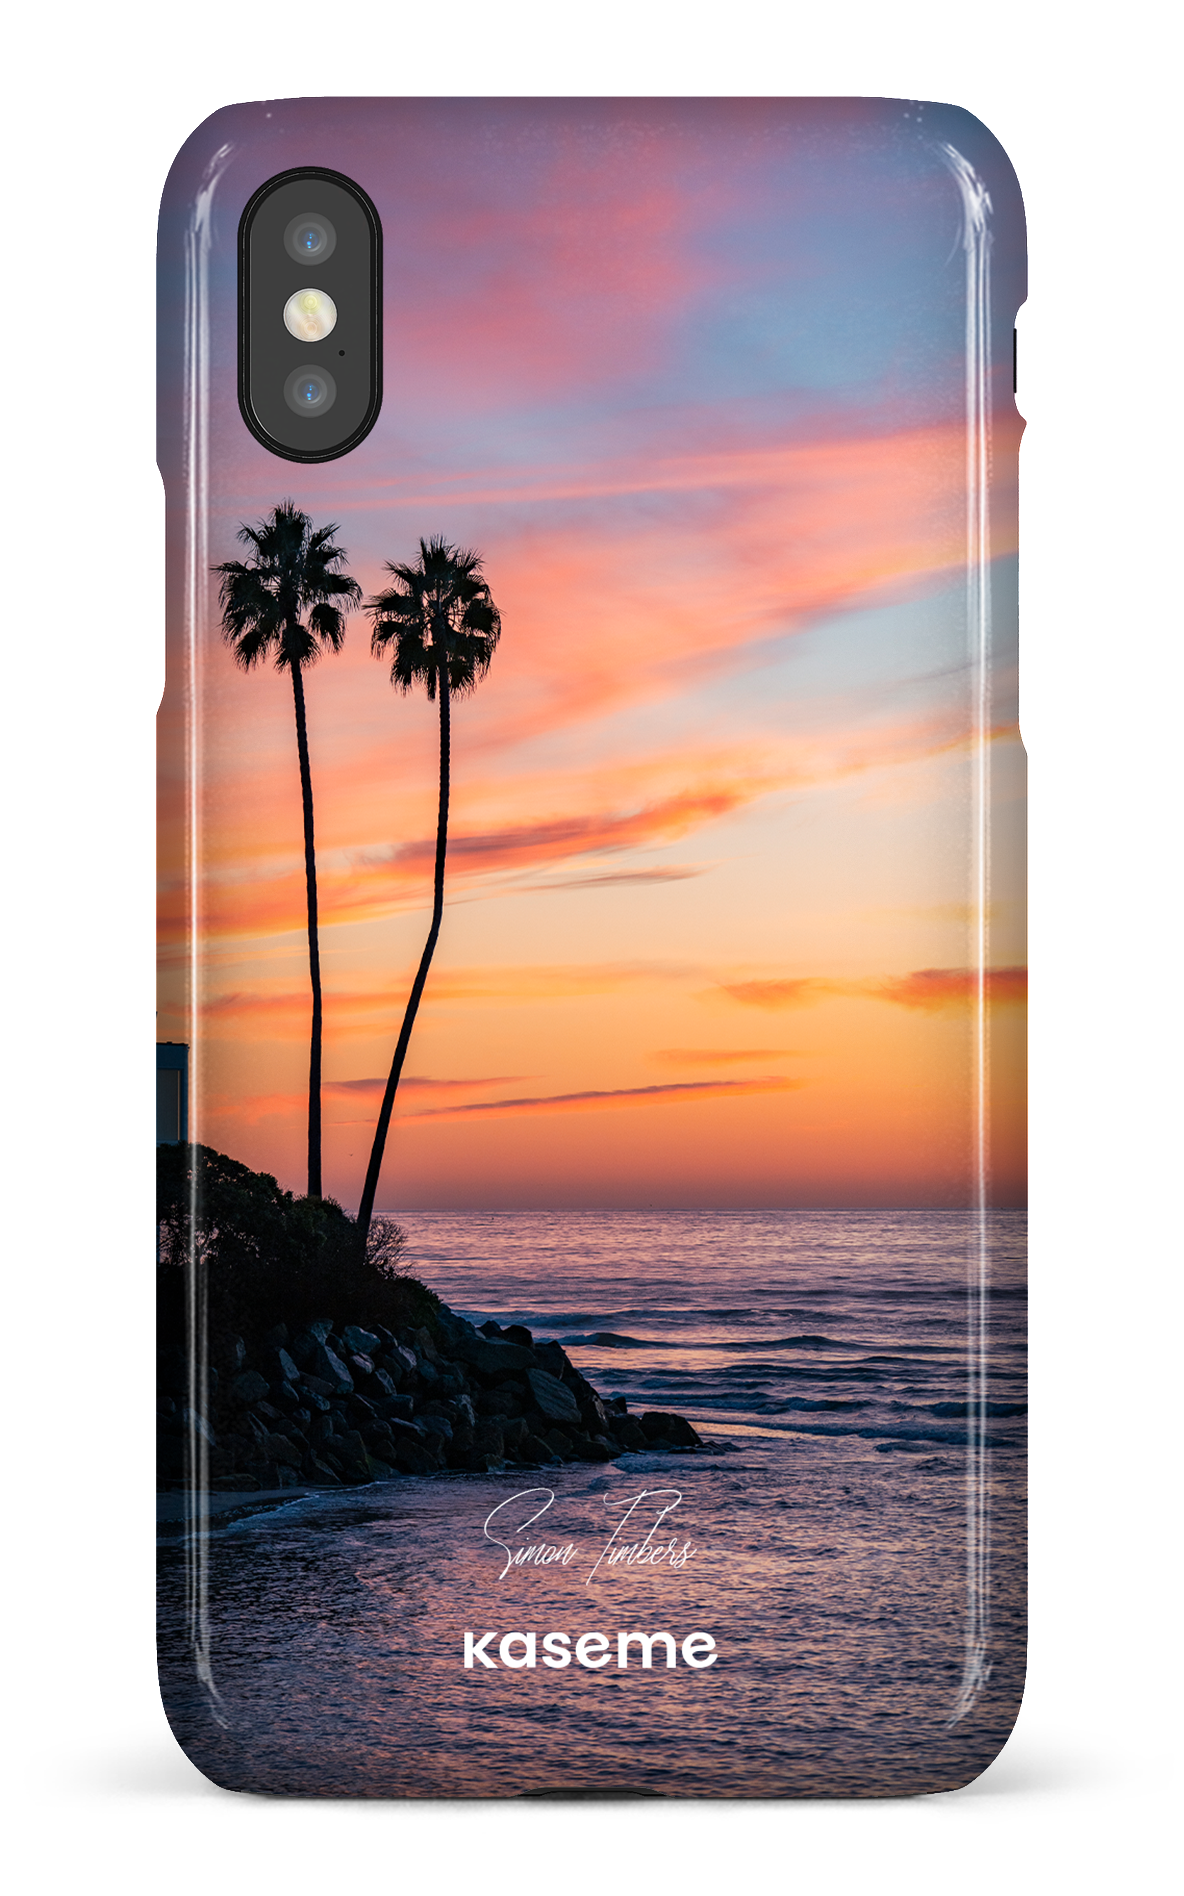 Sunset Palms by Simon Timbers - iPhone X/Xs